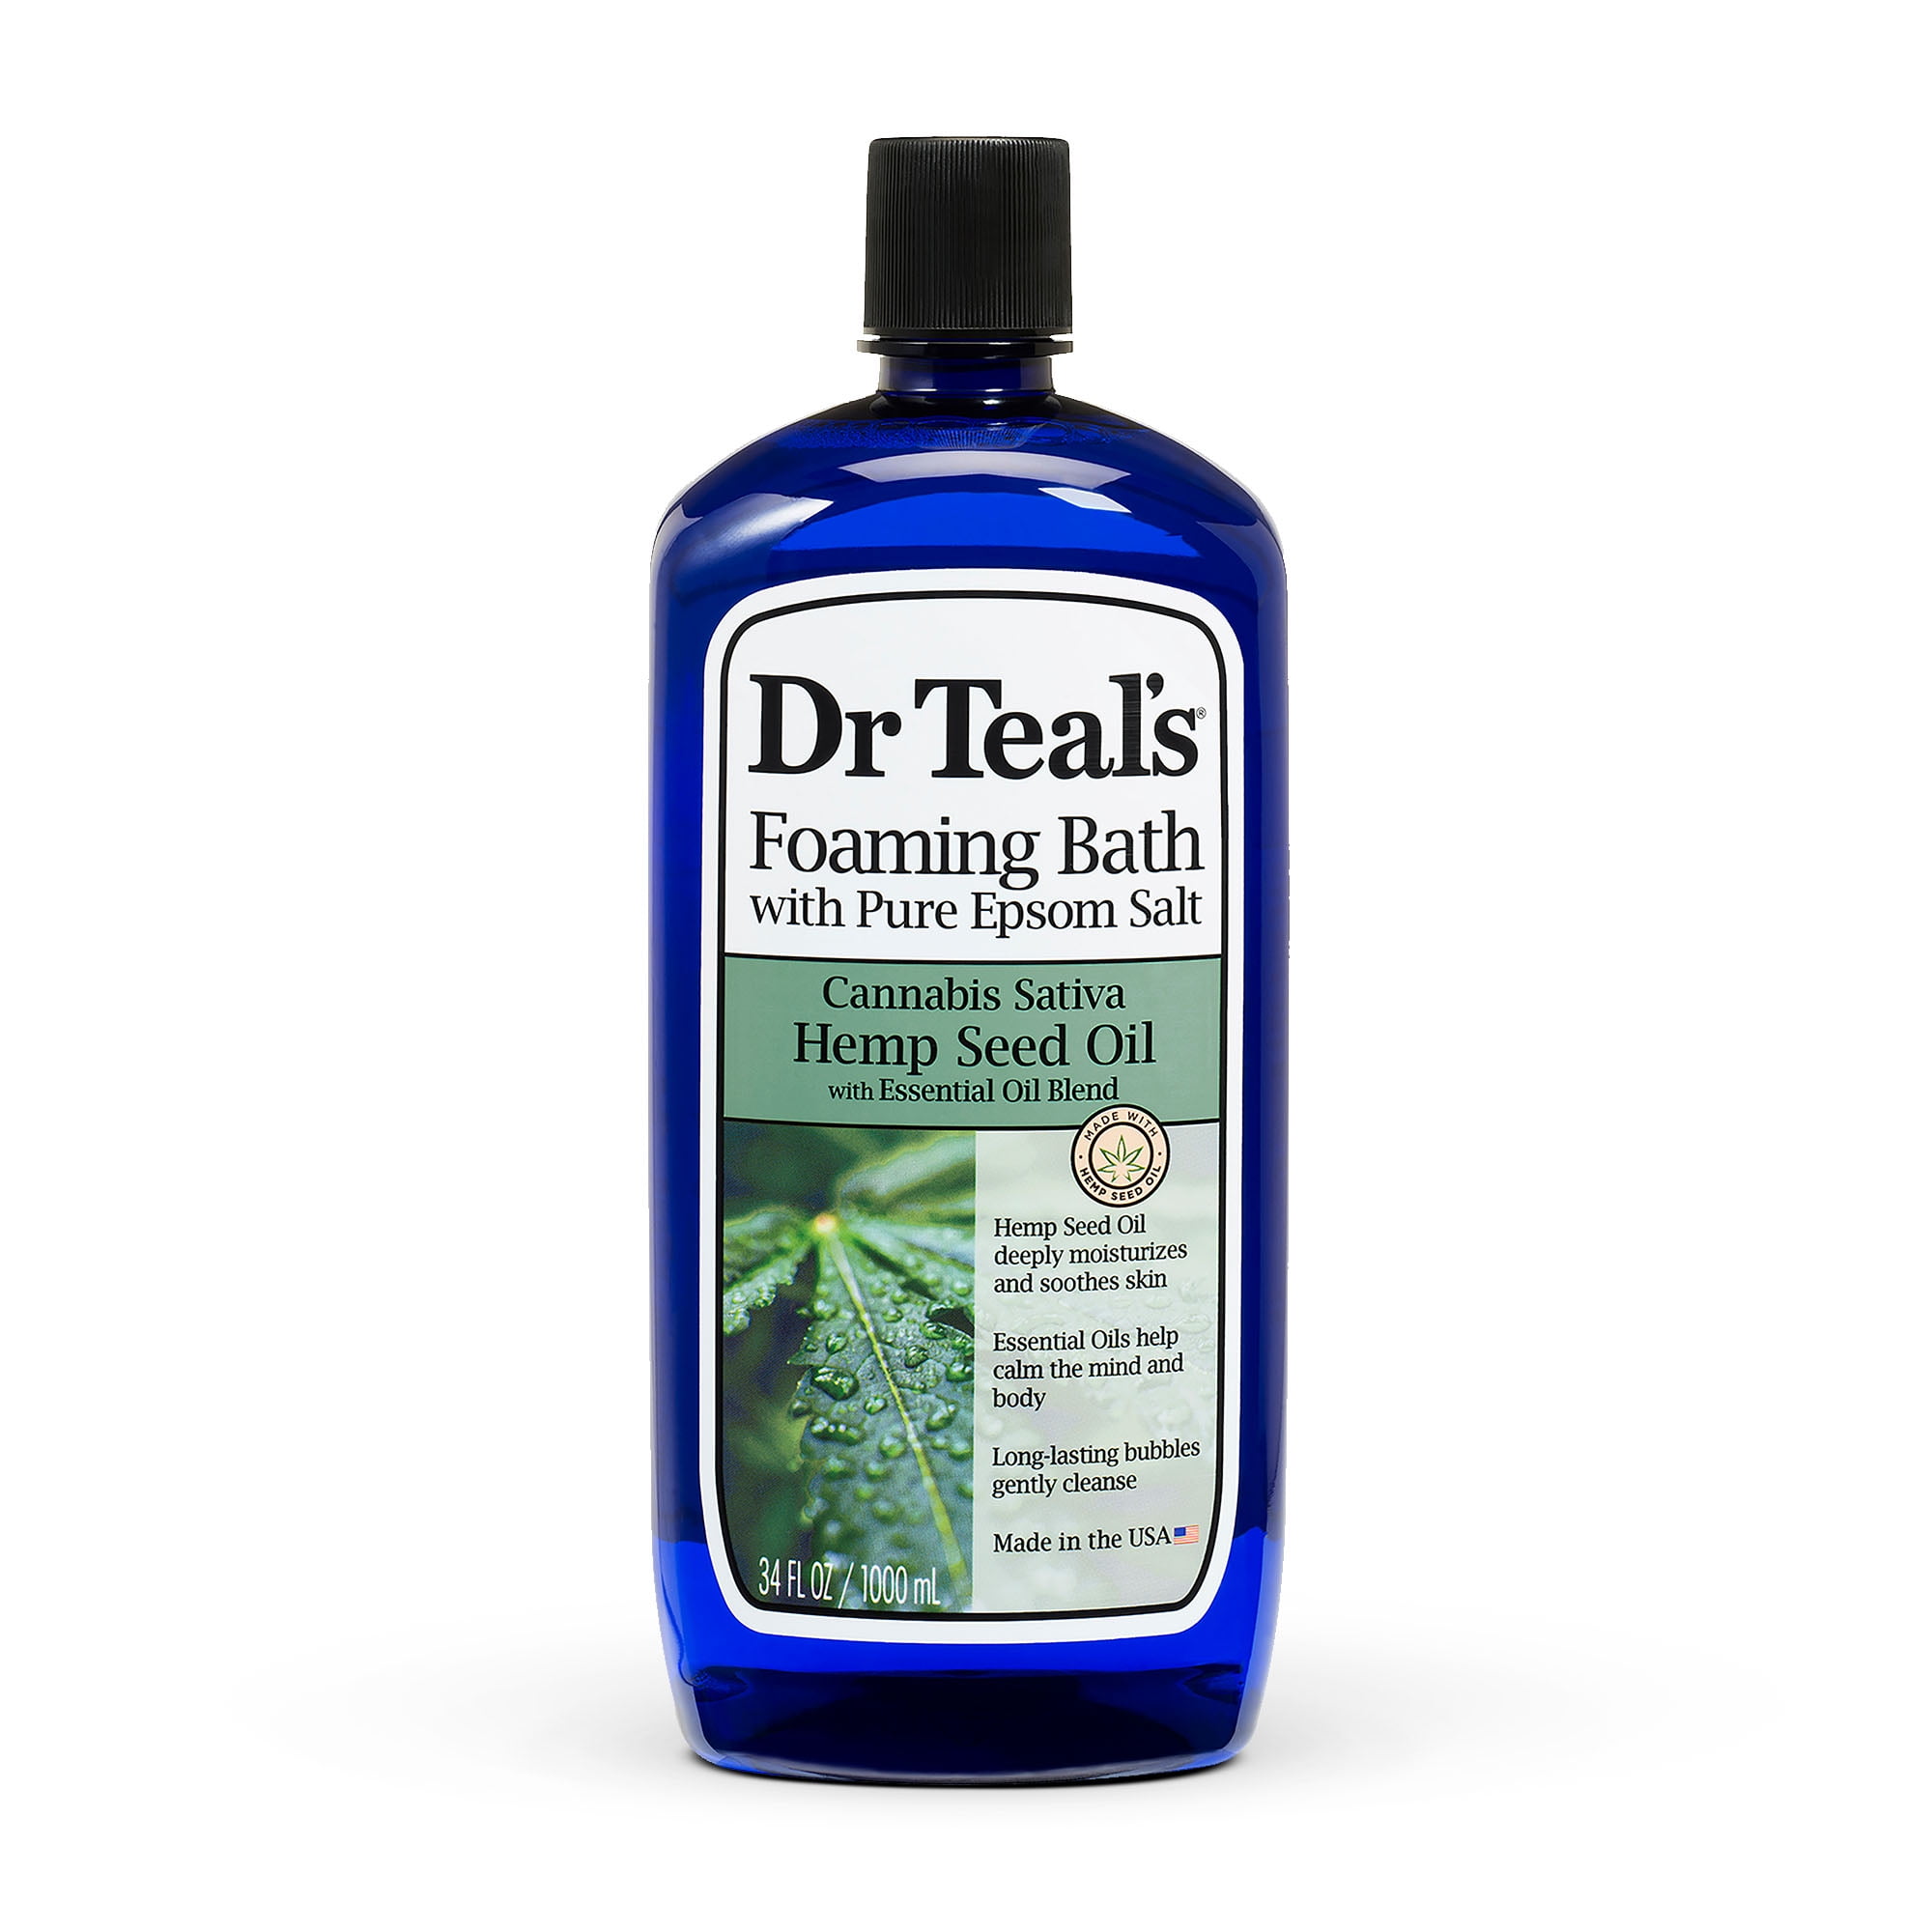 Dr Teal's Foaming Bath with Pure Epsom Salt, Cannabis Sativa Hemp Seed Oil with Essential Oil Blend, 34 fl oz.